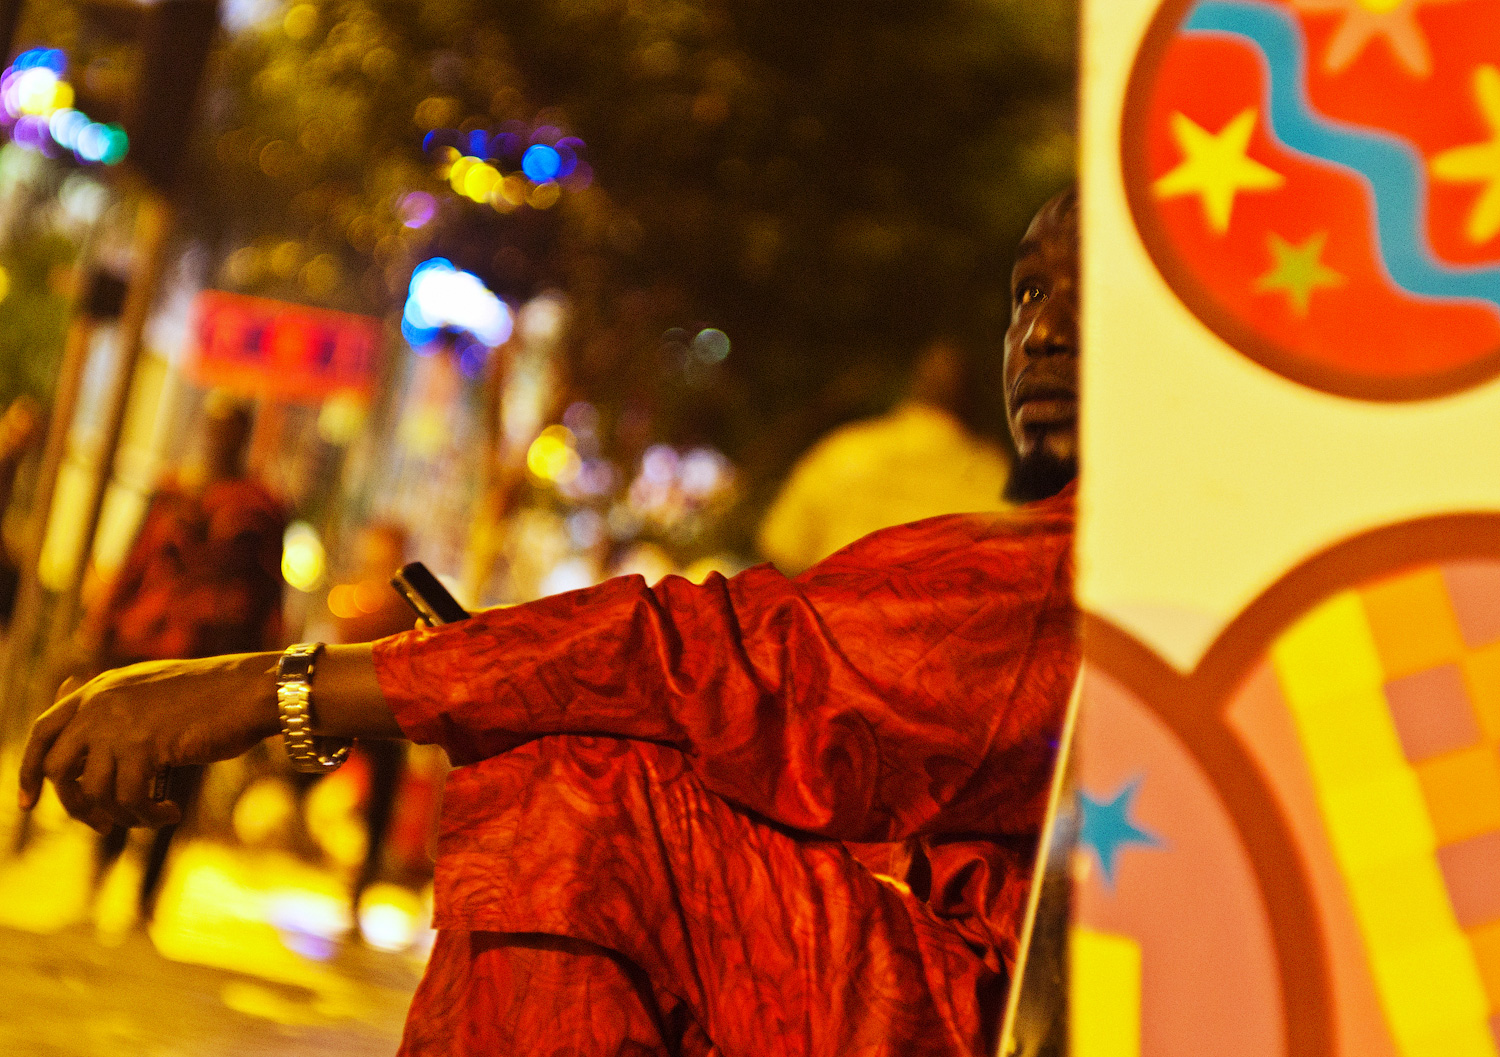 Hong Kong prostitue. Africa unite